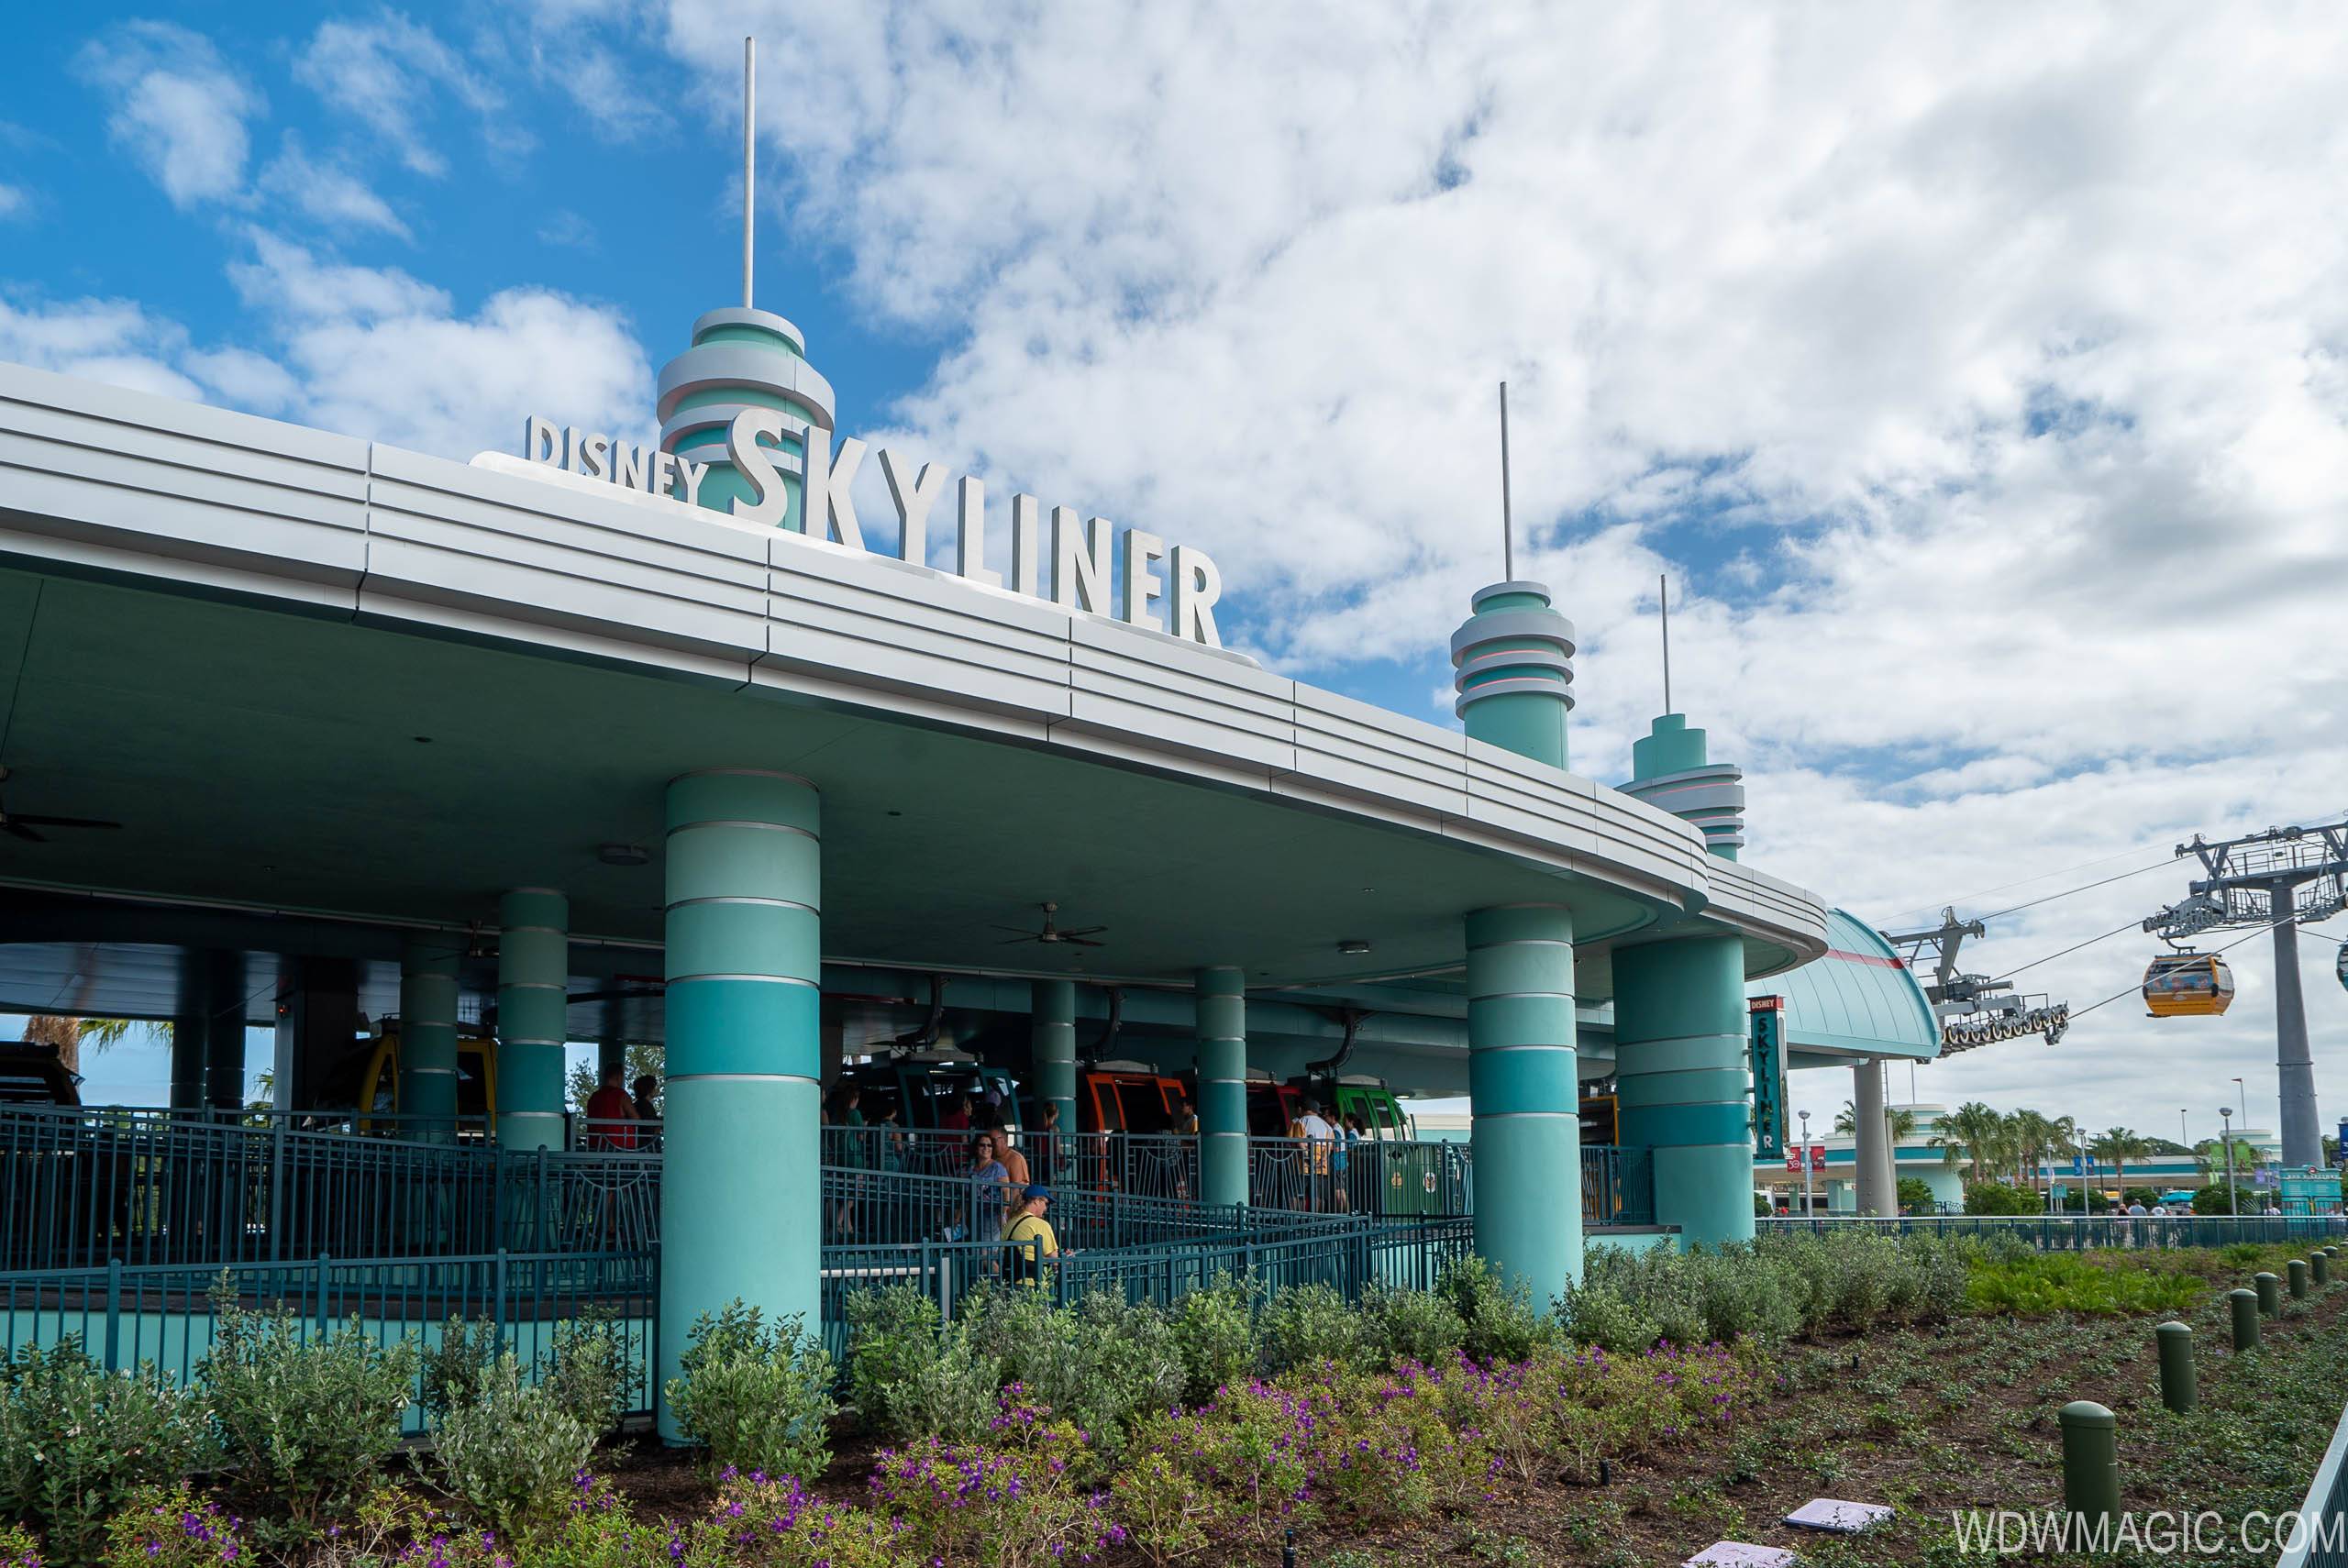 Disney Skyliner to resume operation on July 15